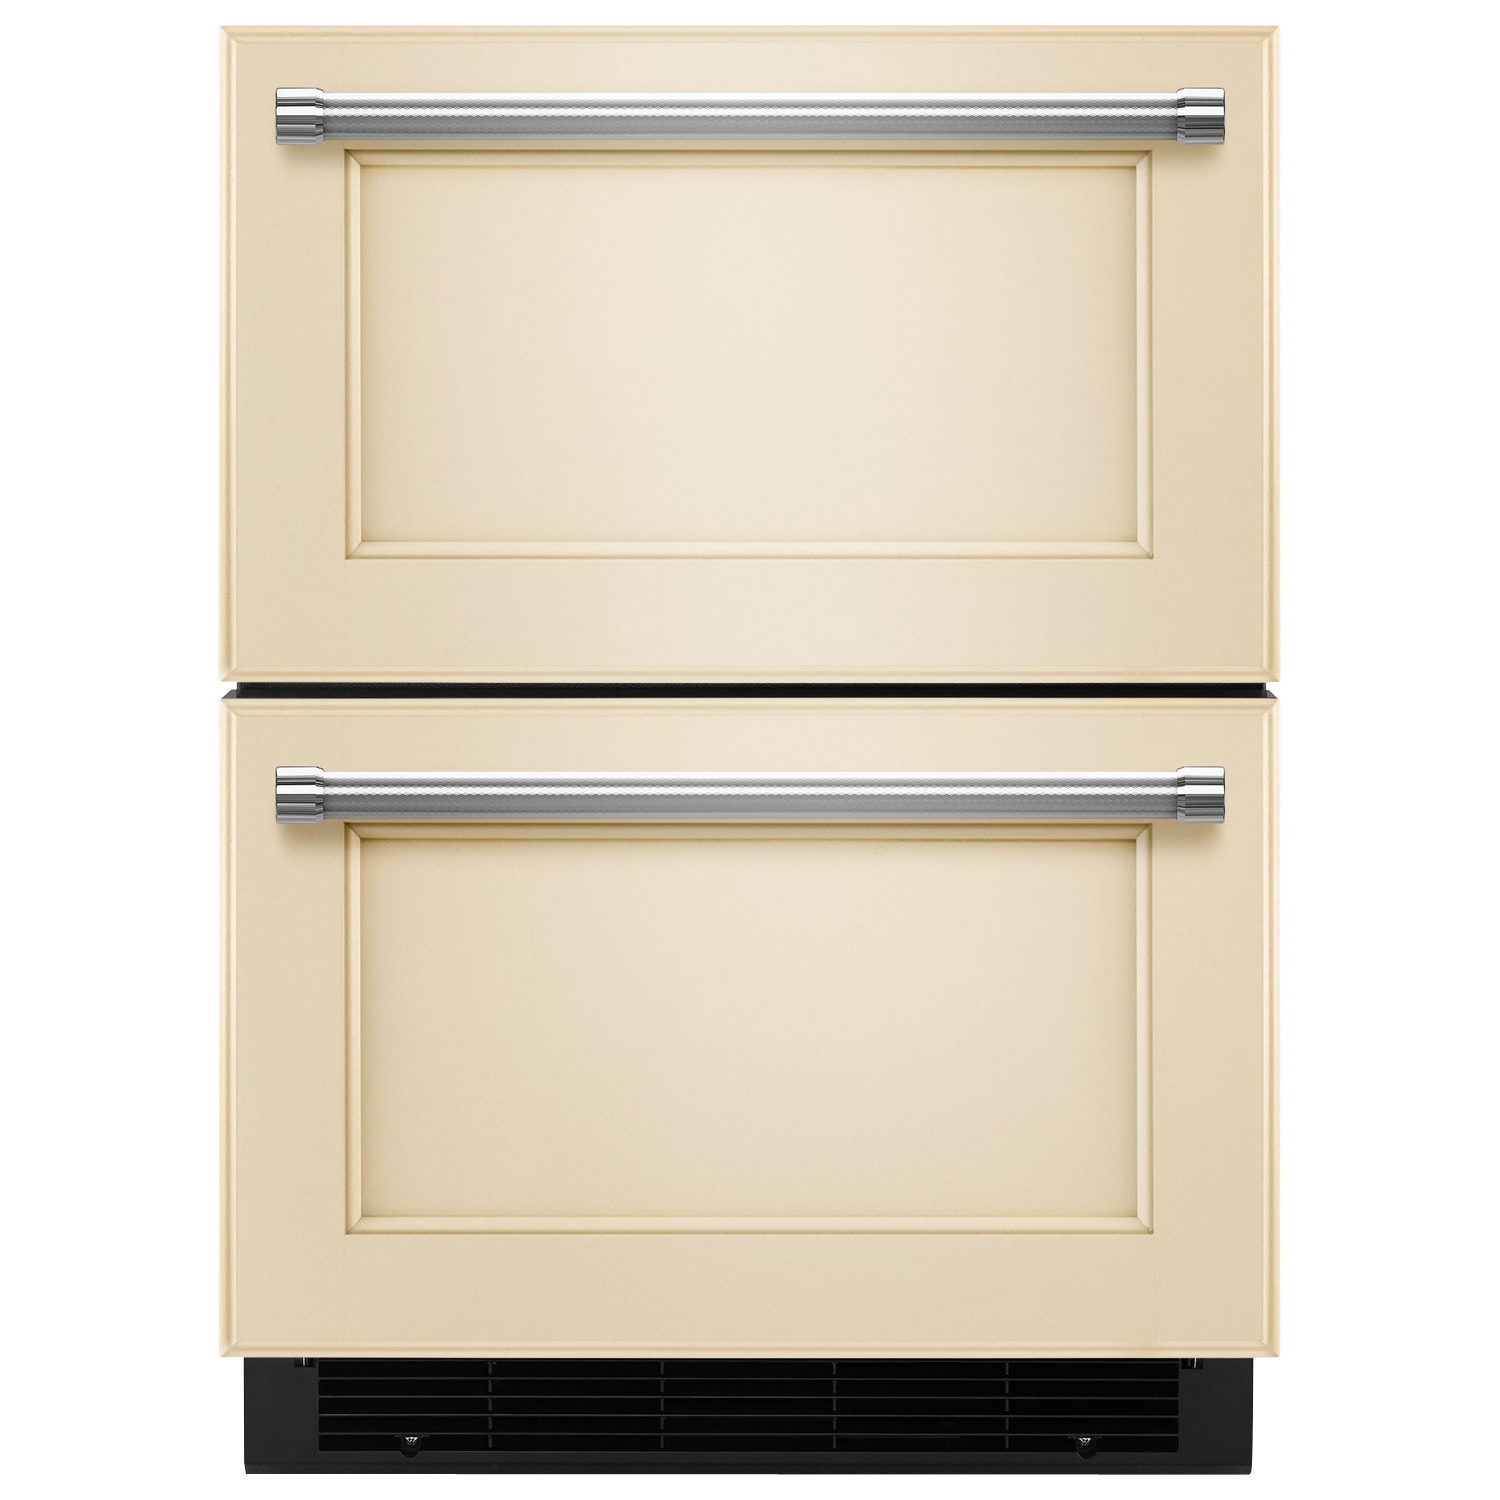 Buy KitchenAid Refrigerator KUDF204EPA